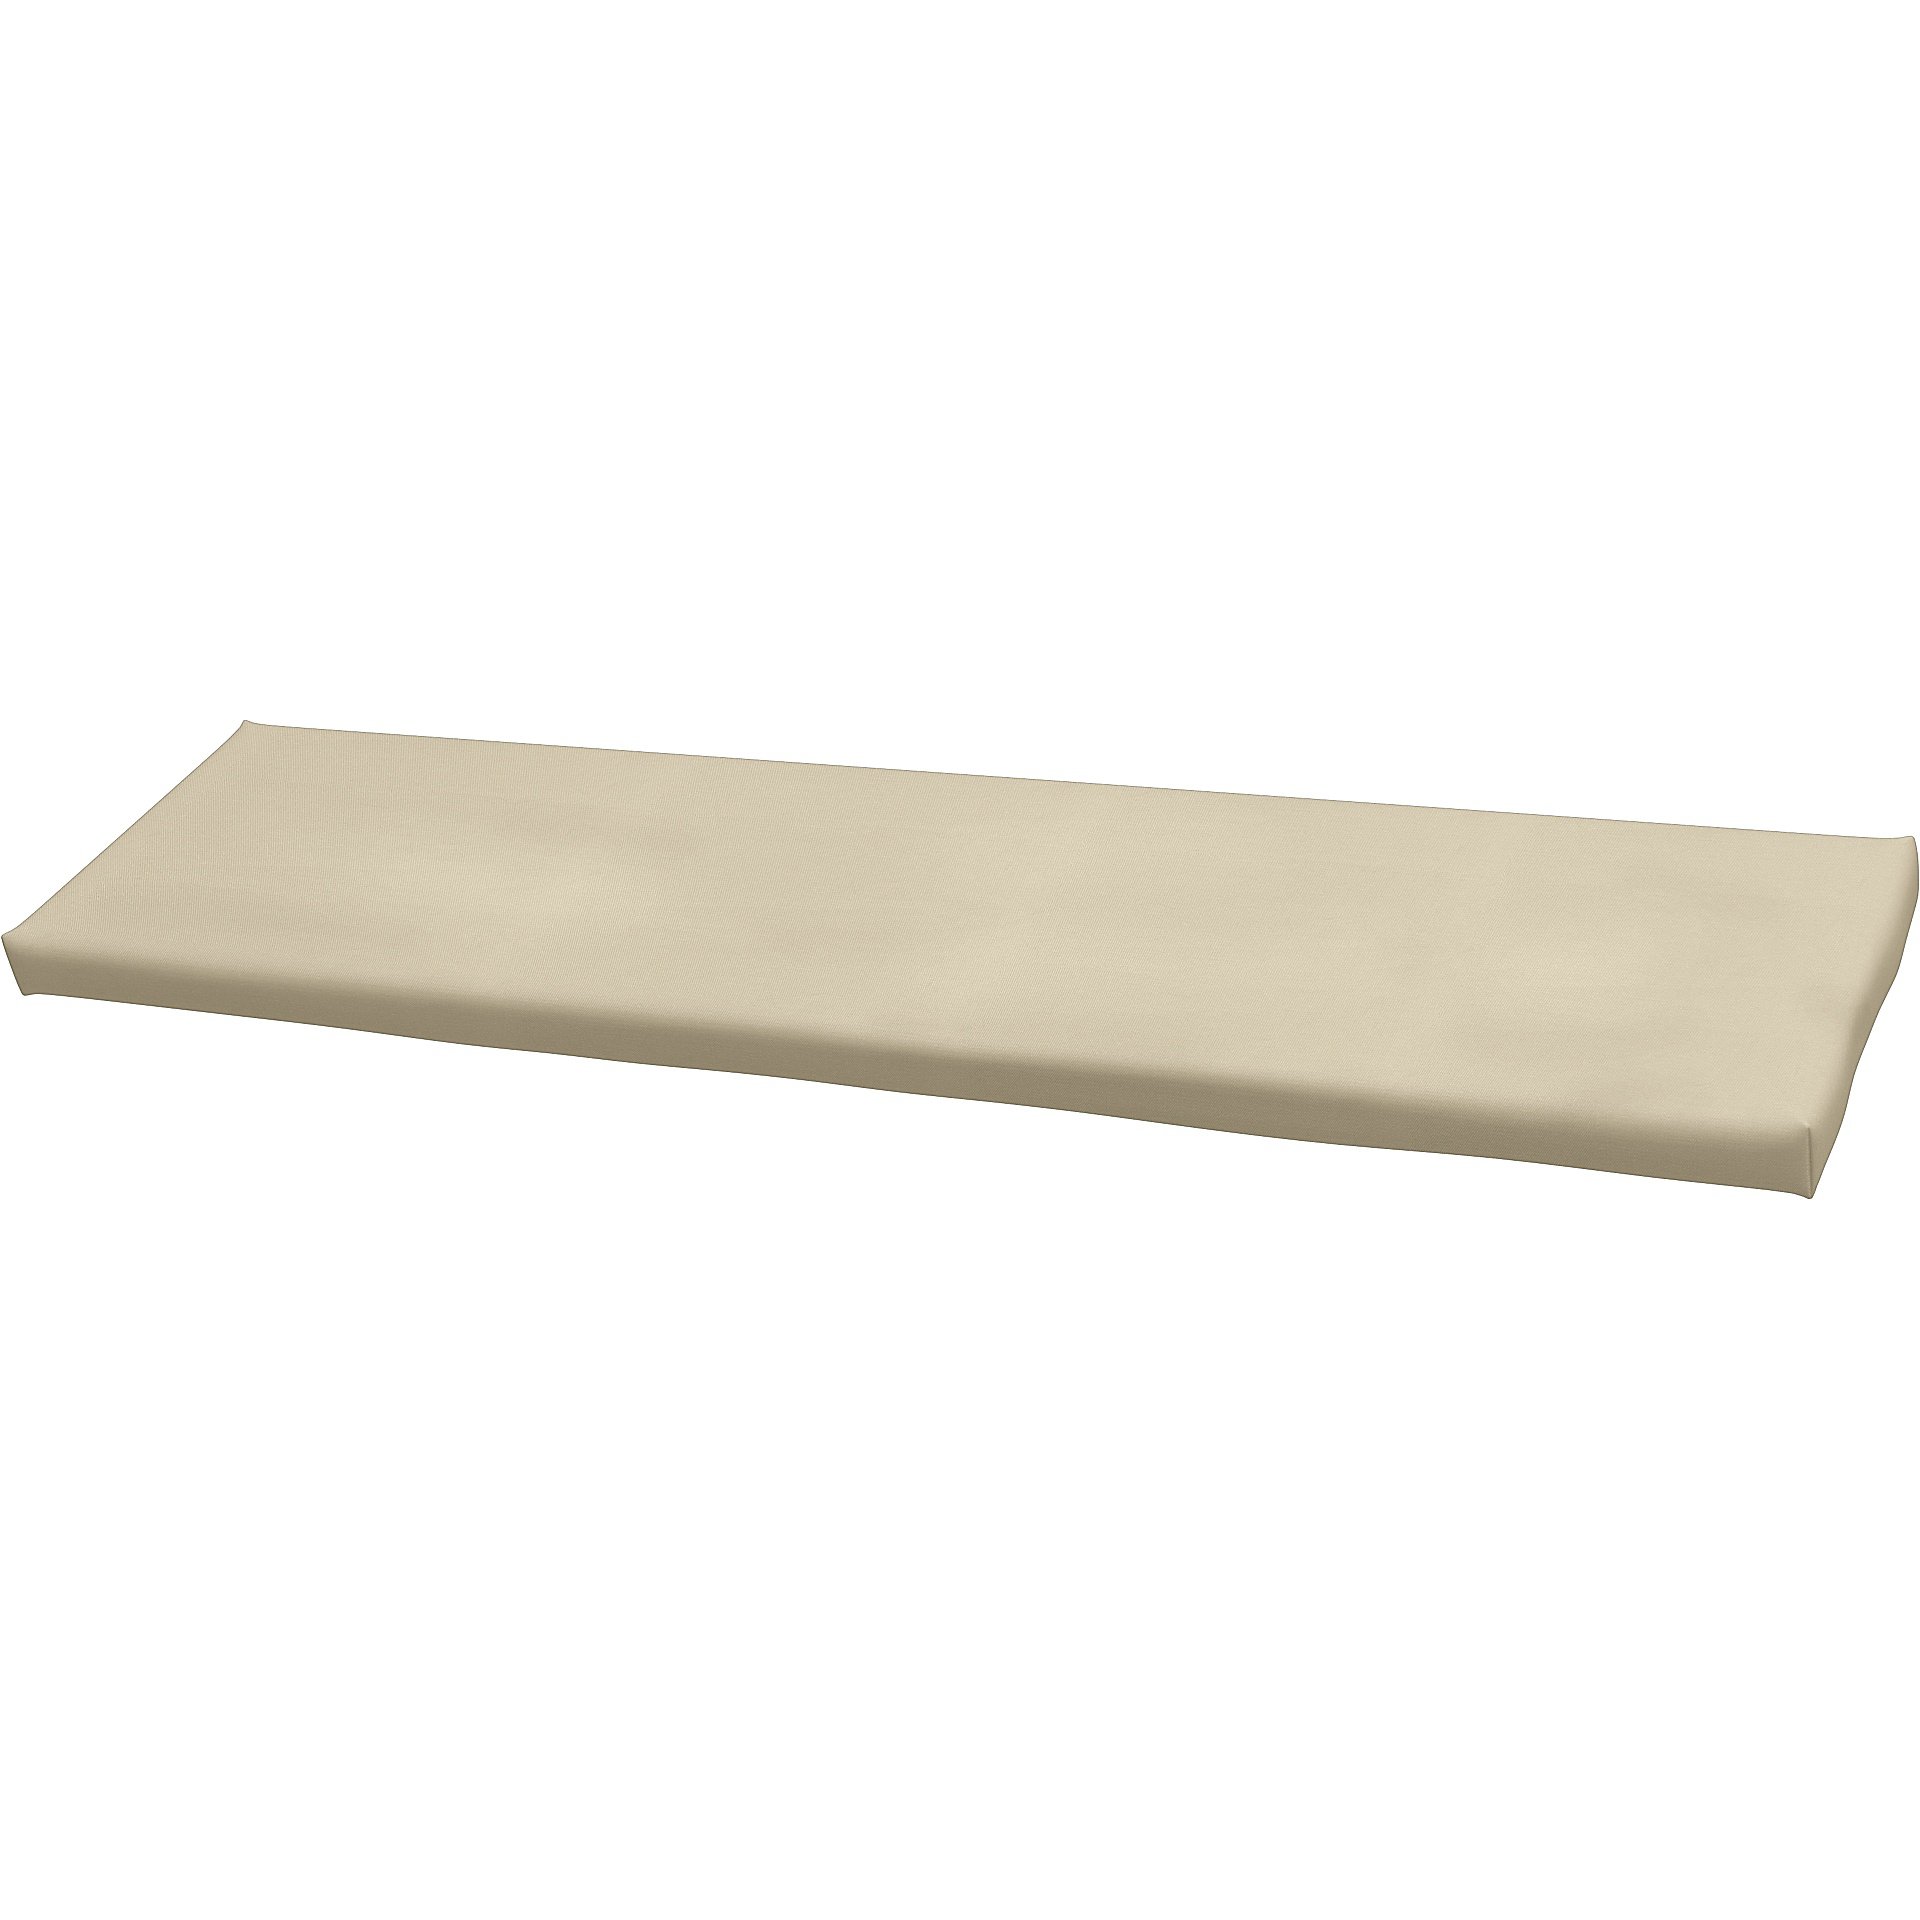 IKEA - Universal bench cushion cover 120x35x3,5 cm, Sand Beige, Cotton - Bemz